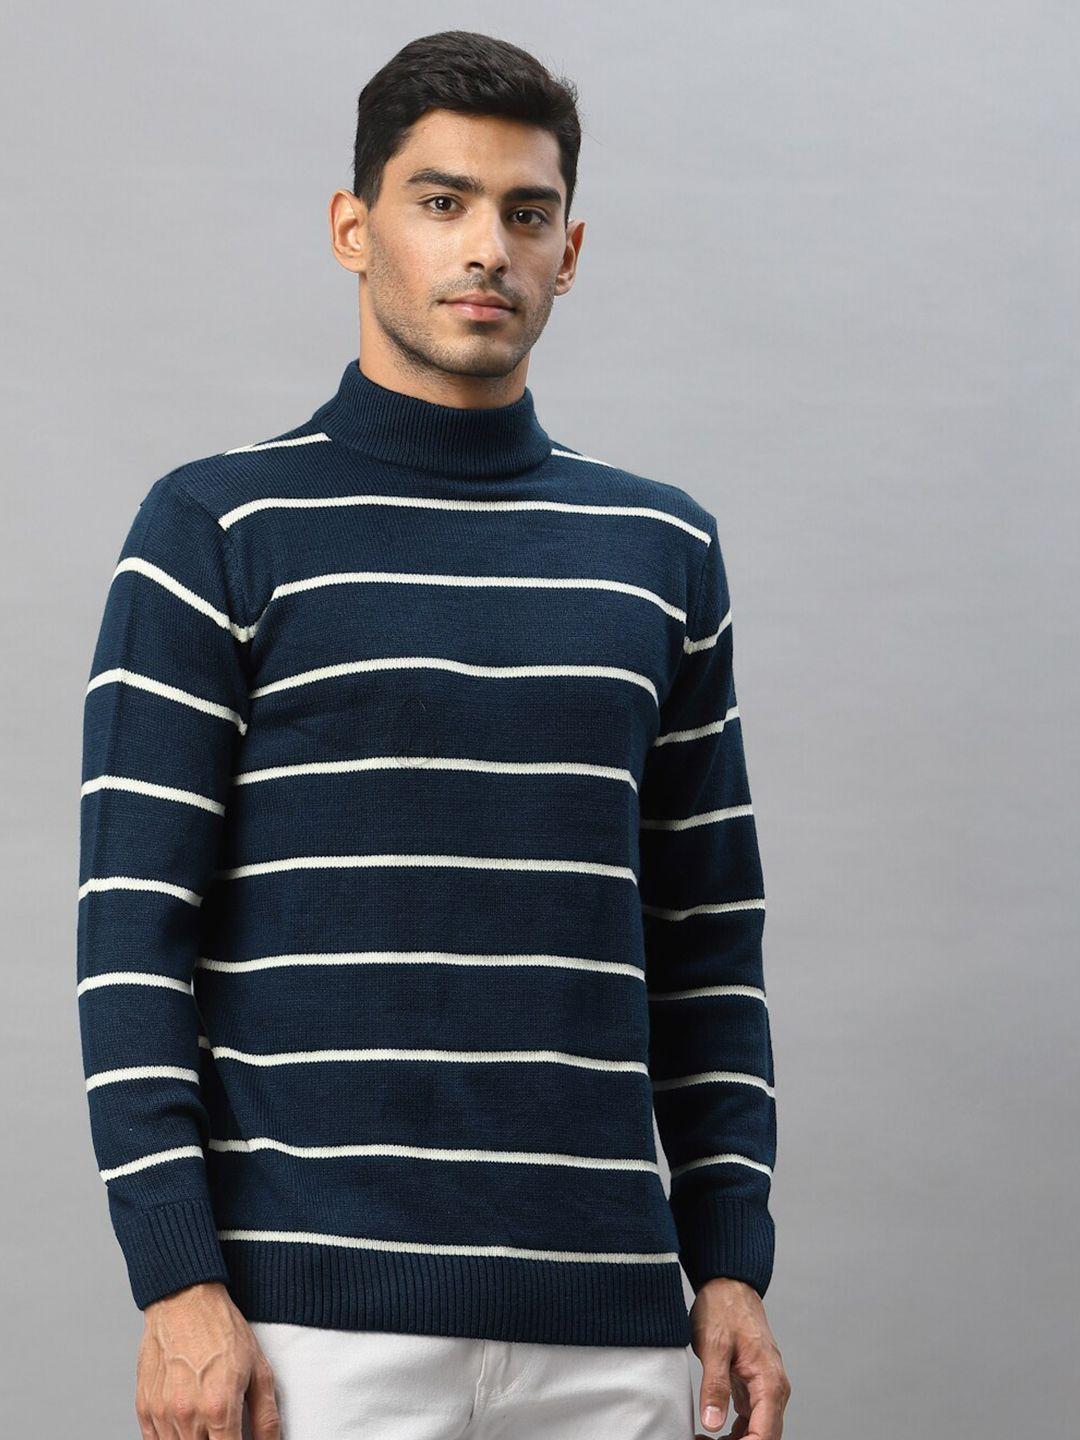 style quotient men teal & white striped sweater vest